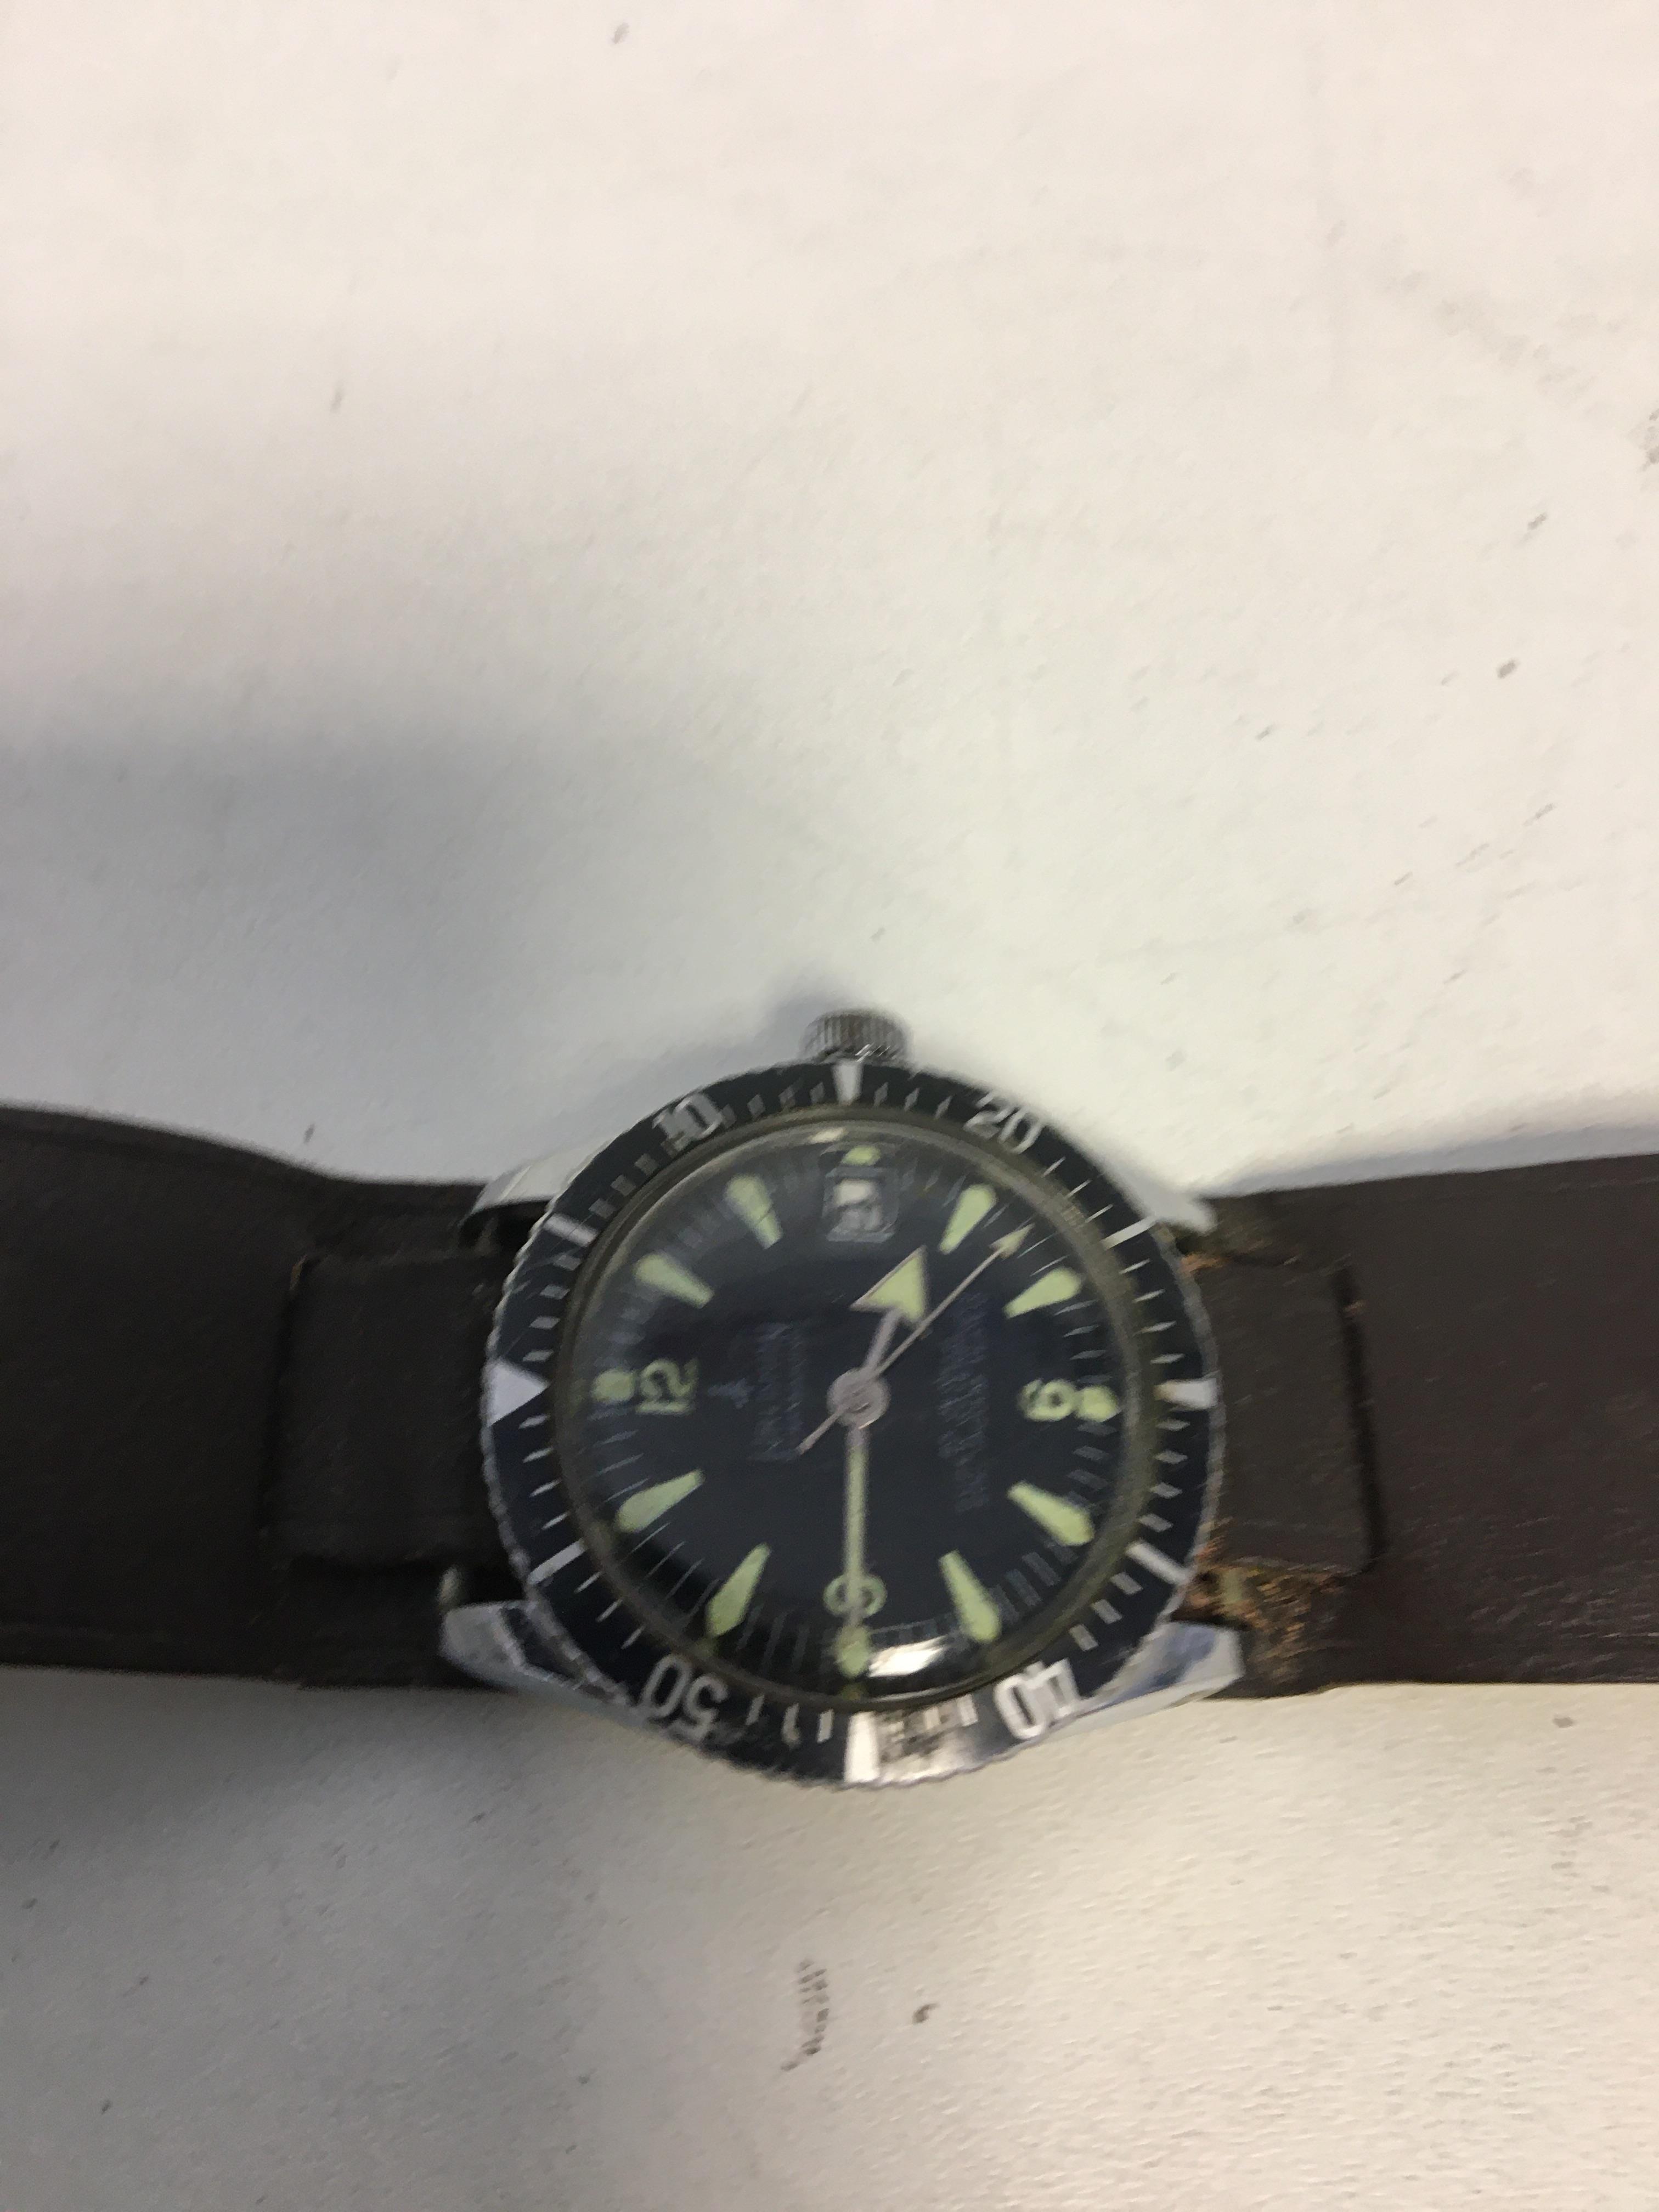 Vintage Submariner watch - Image 3 of 3